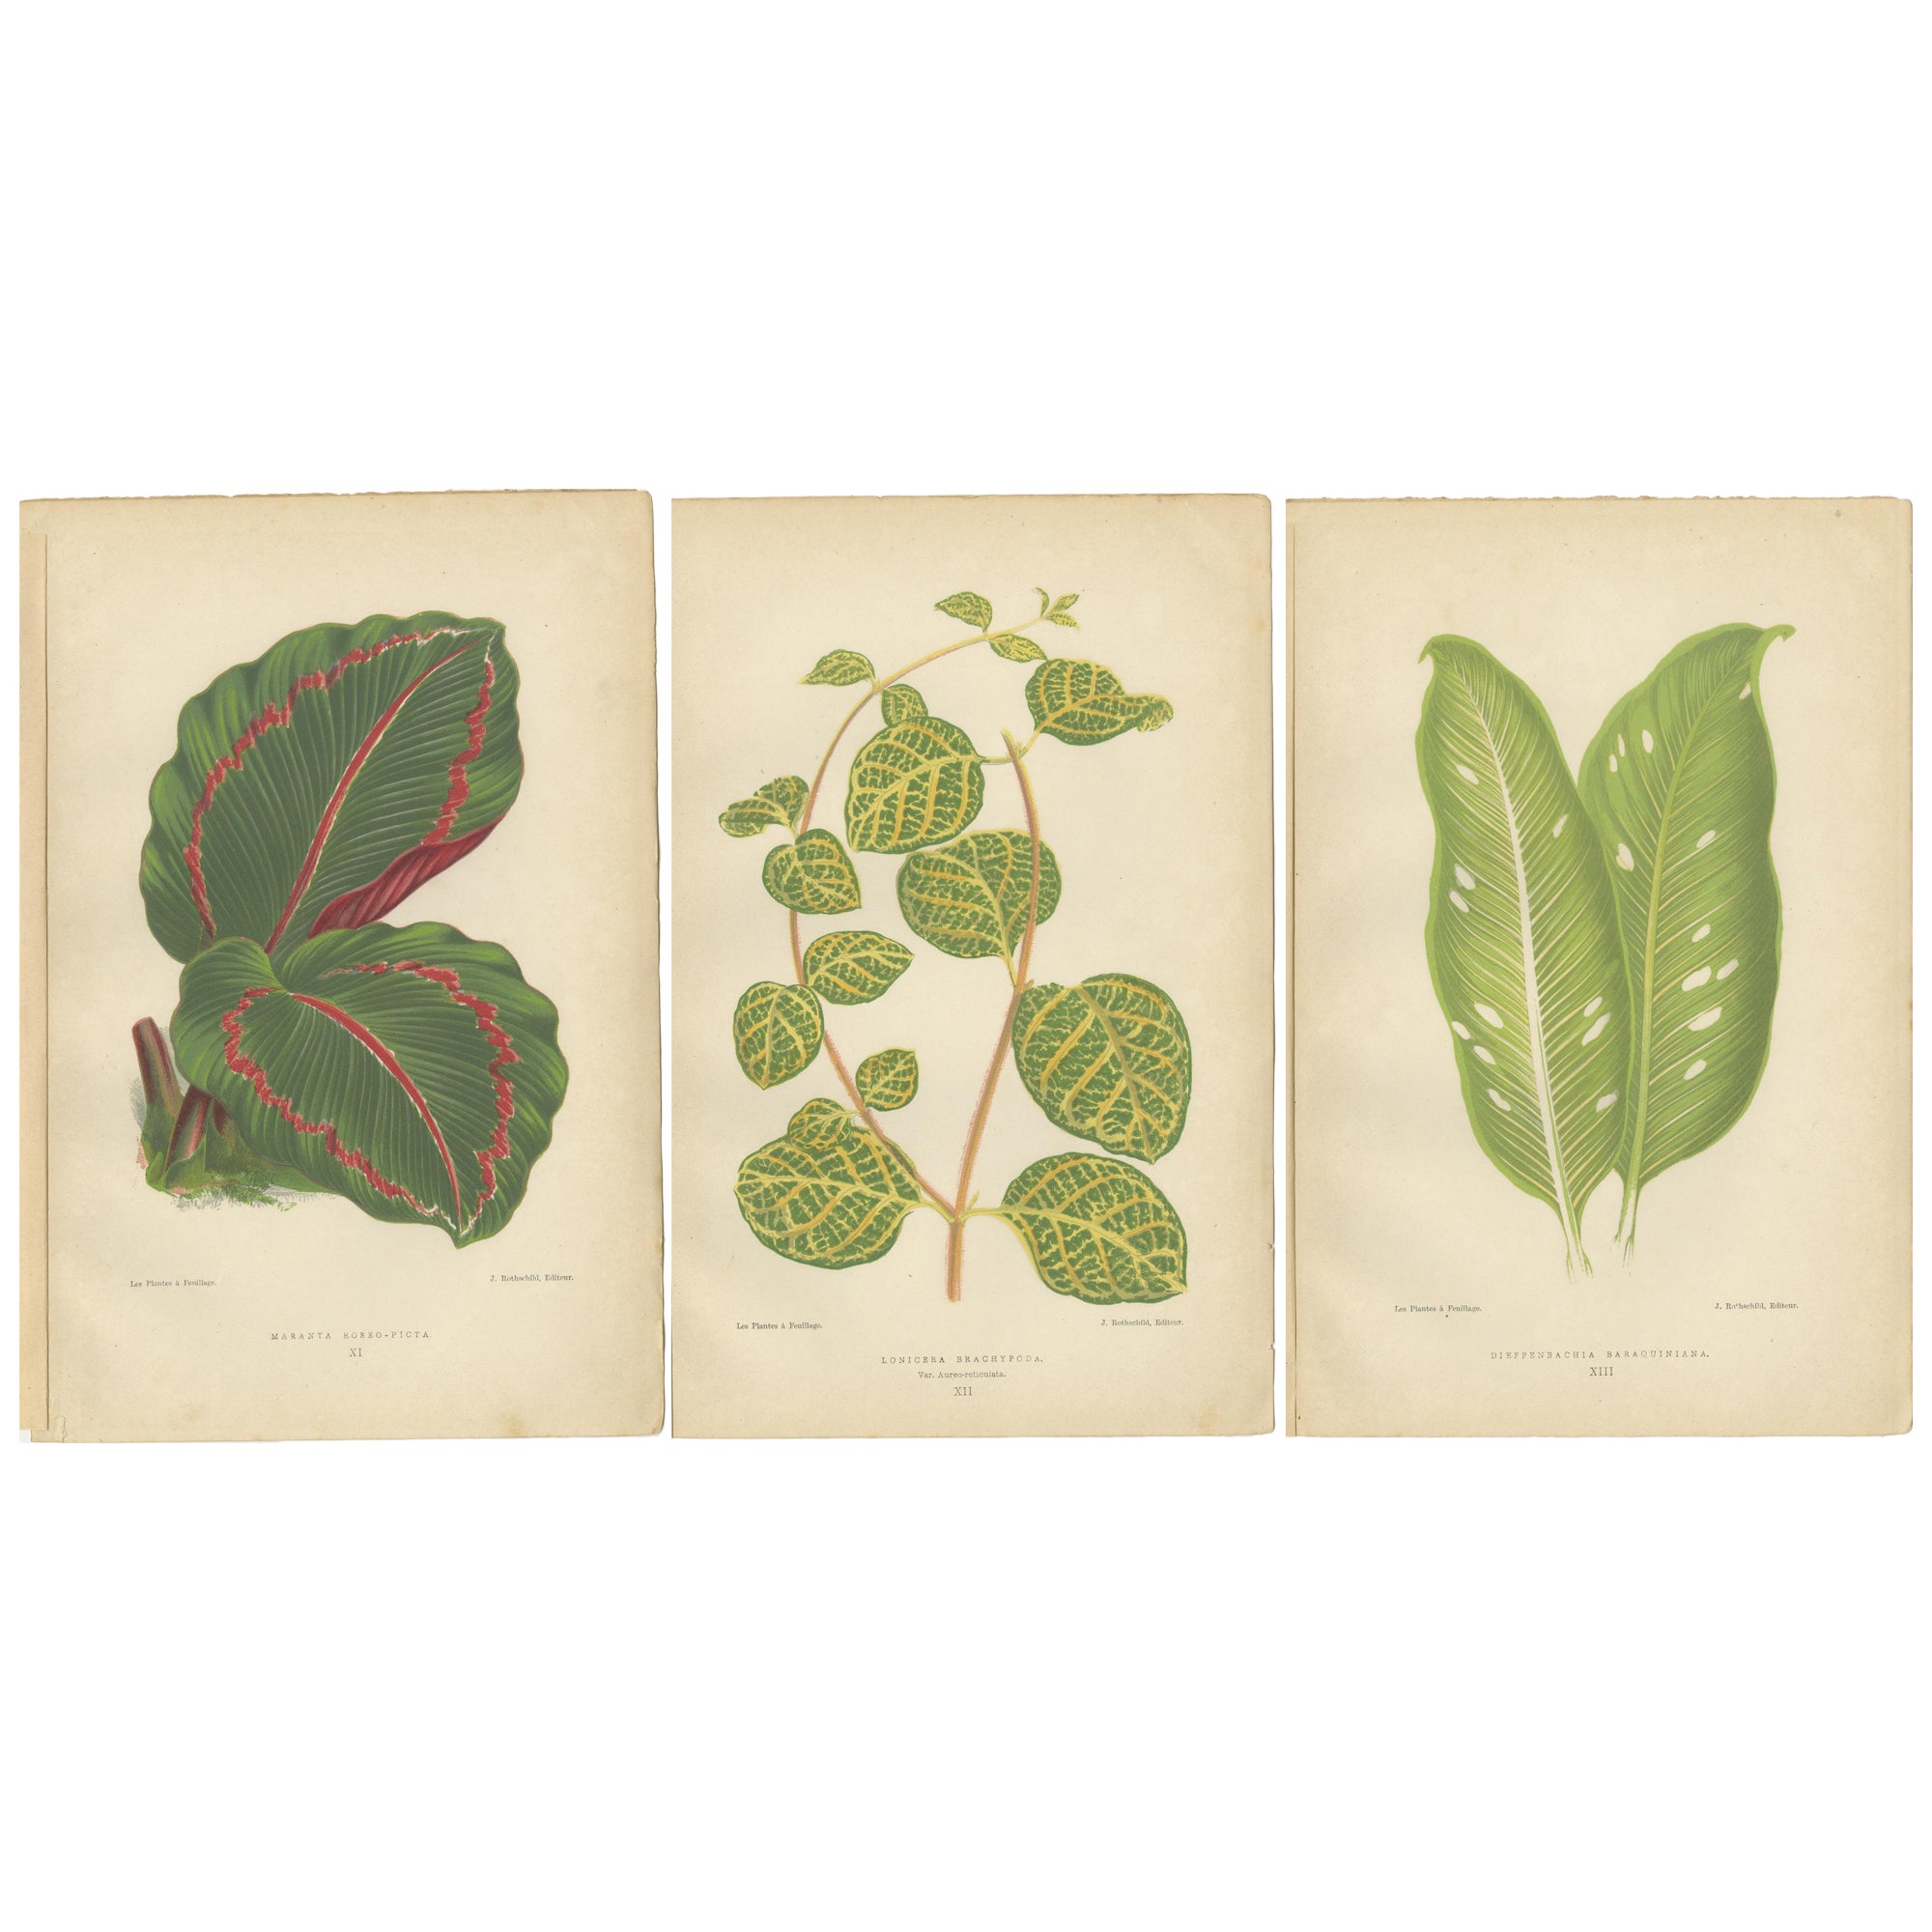 Vibrant Elegance: Botanical Illustrations of Foliage from 1880 Paris For Sale